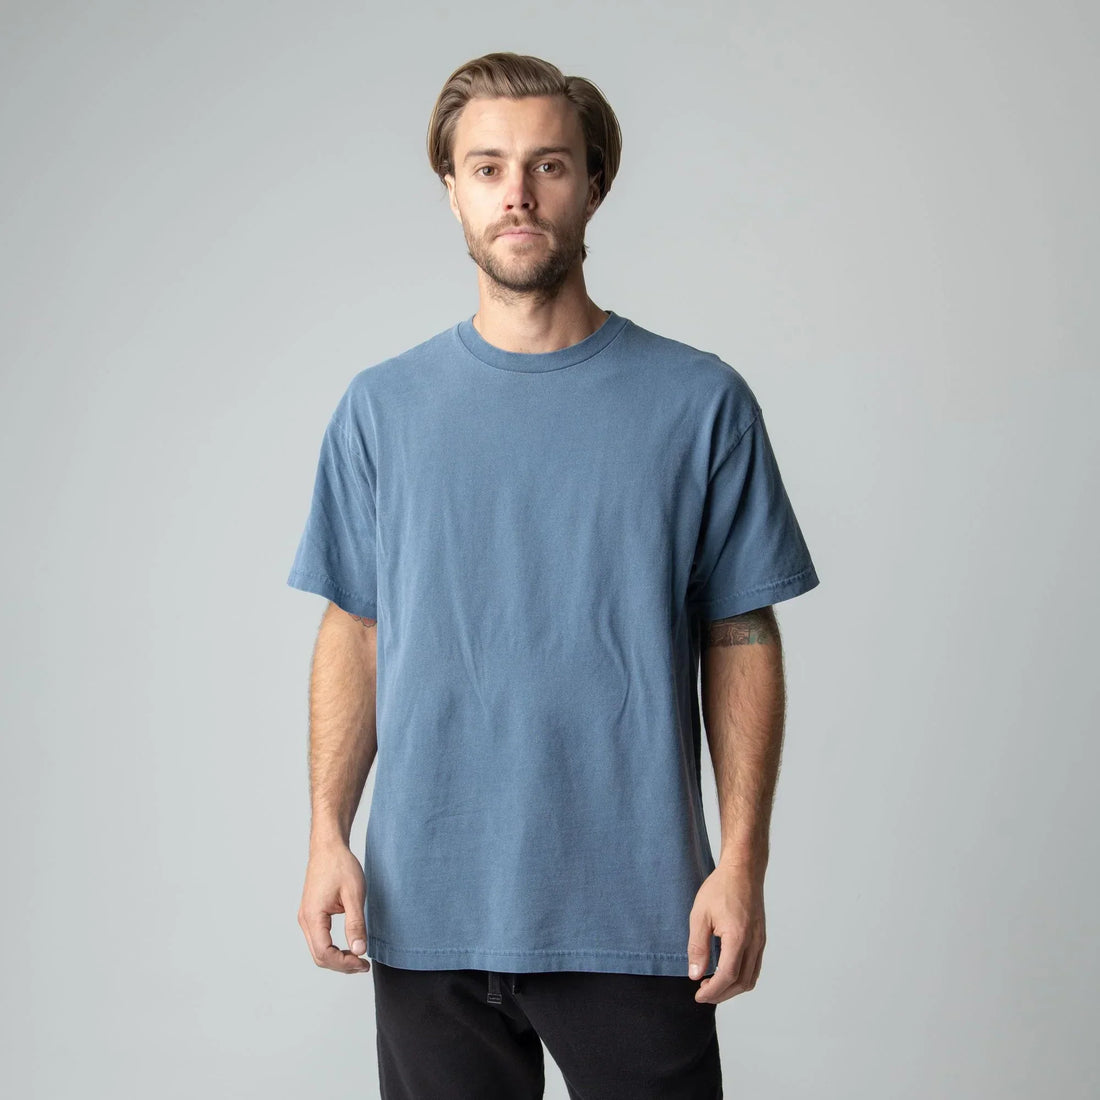 Drop Shoulder Tee - FINAL SALE - Premium T-Shirt Denim from Talentless - Just $10! Shop now at shopthedenimbar